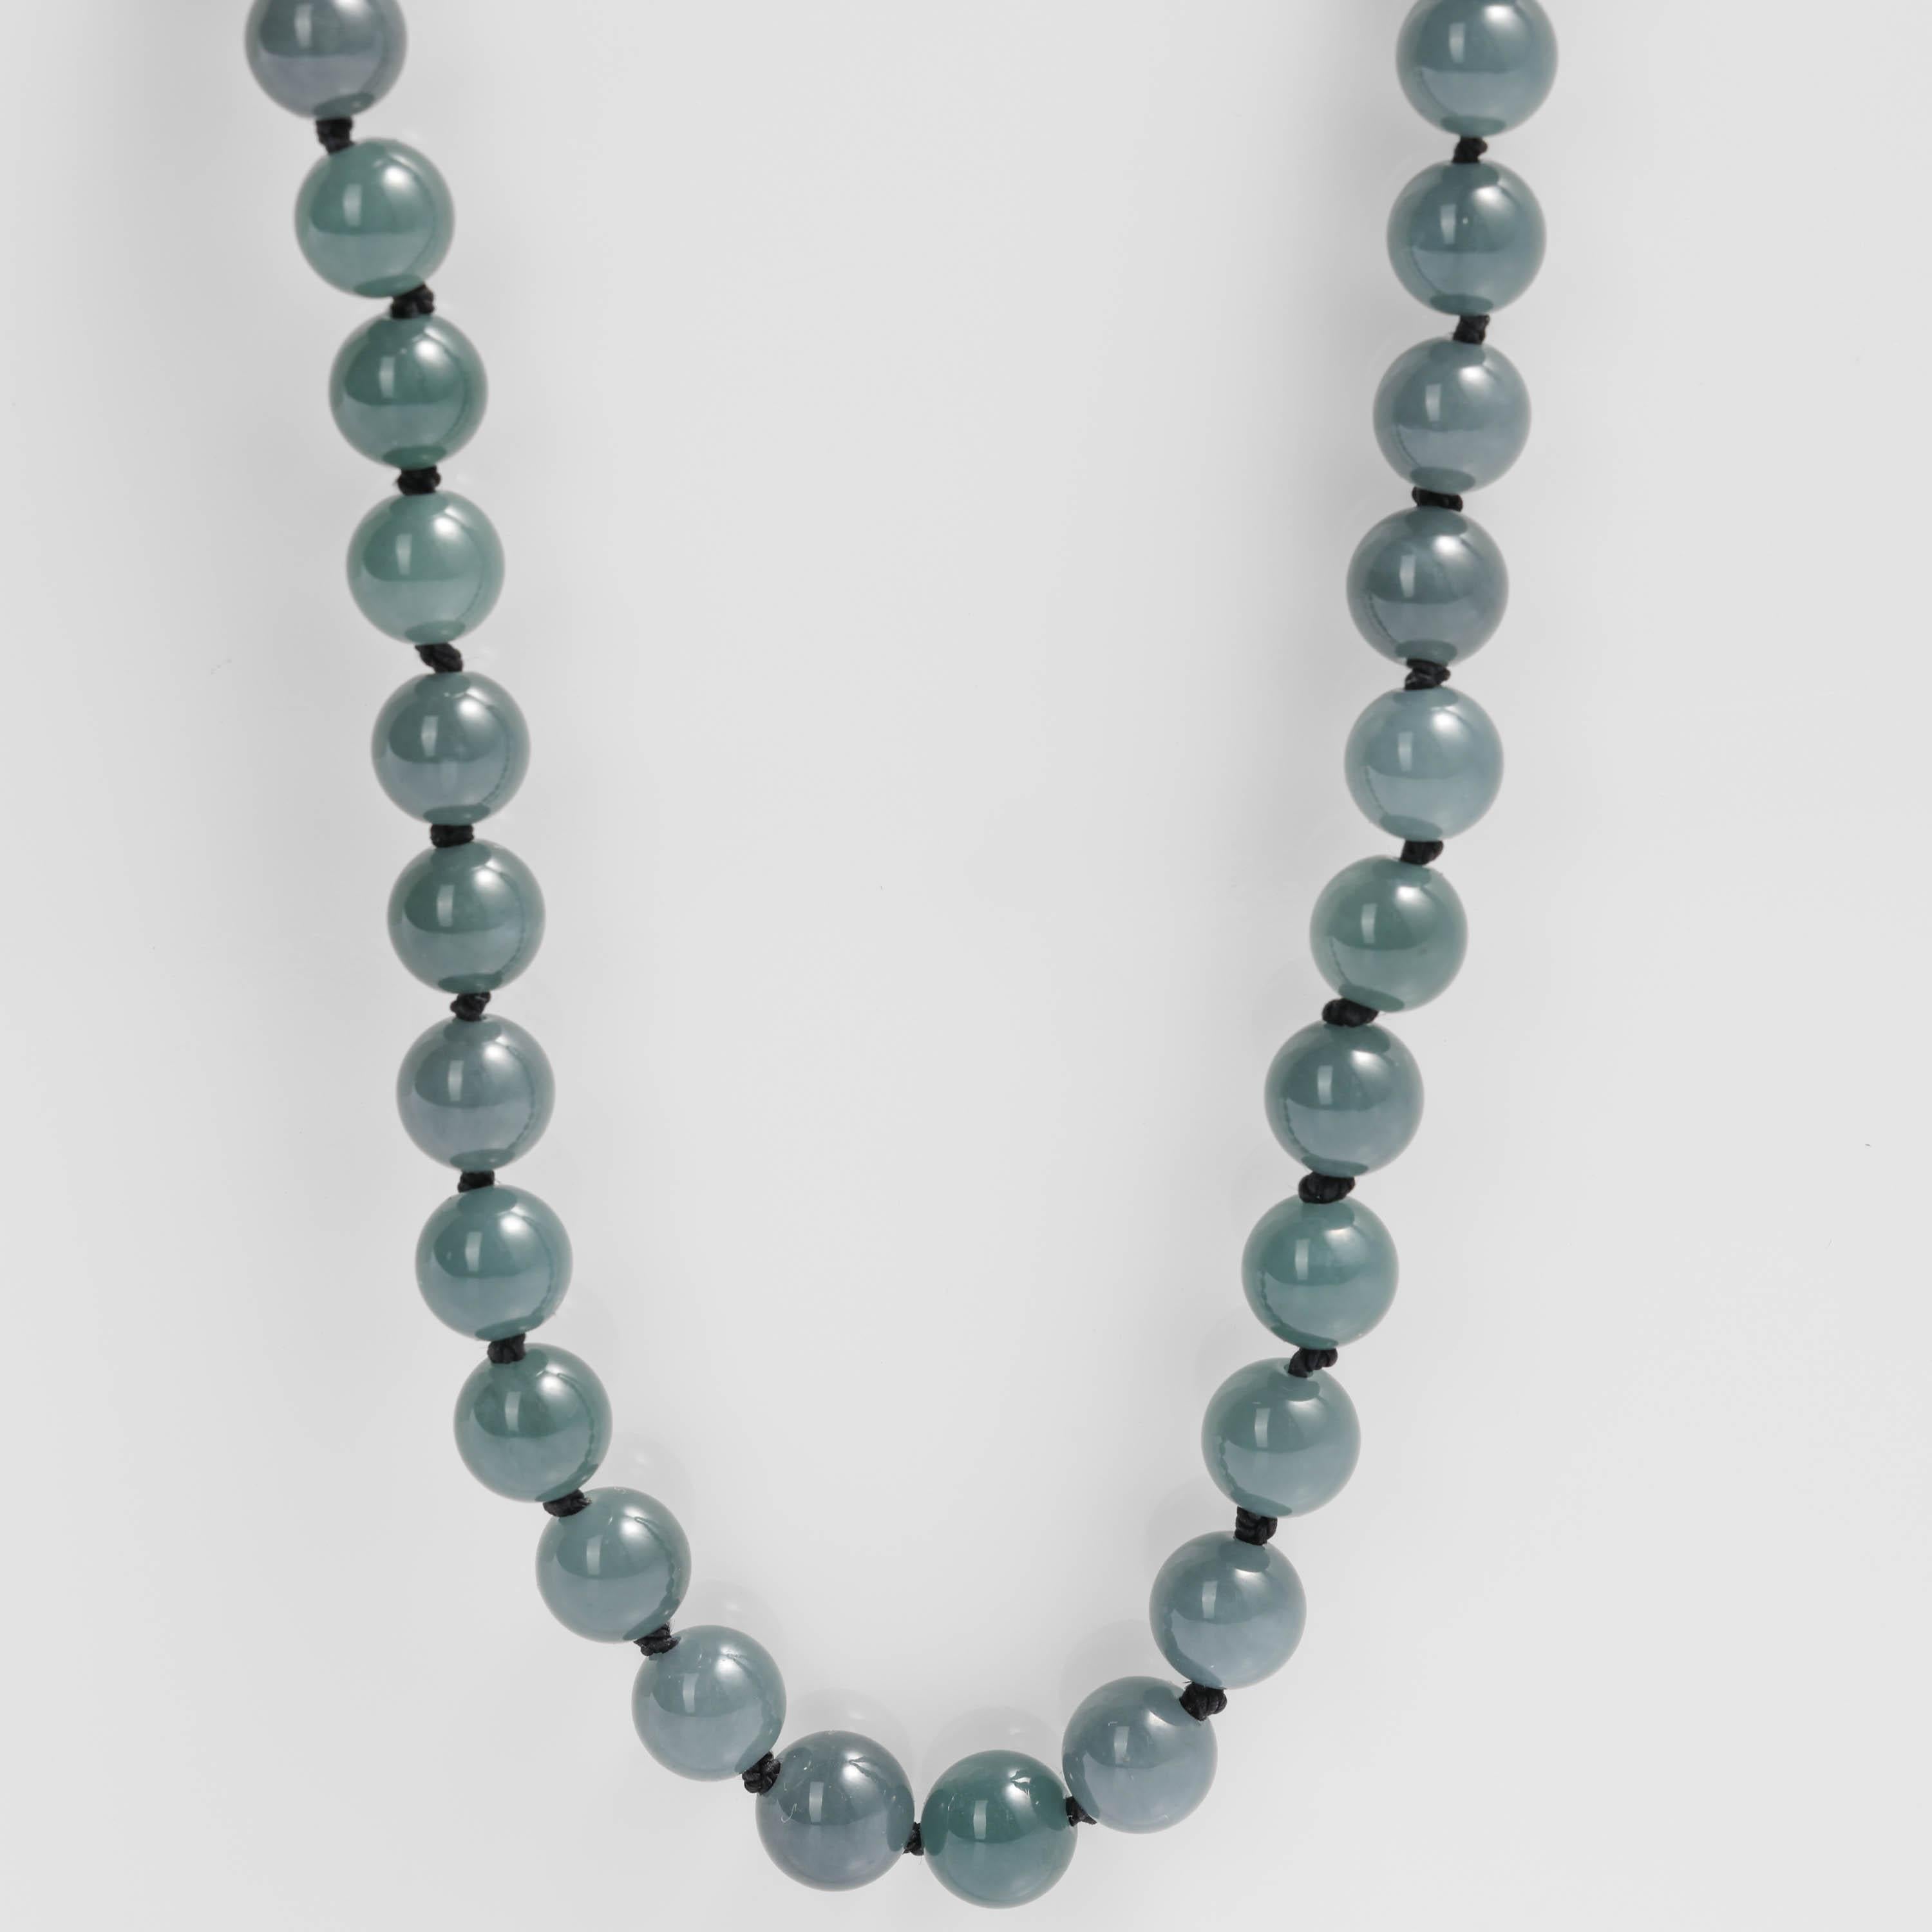 Bead Jade Necklace Translucent Greenish-Blue Certified Untreated, New, 25